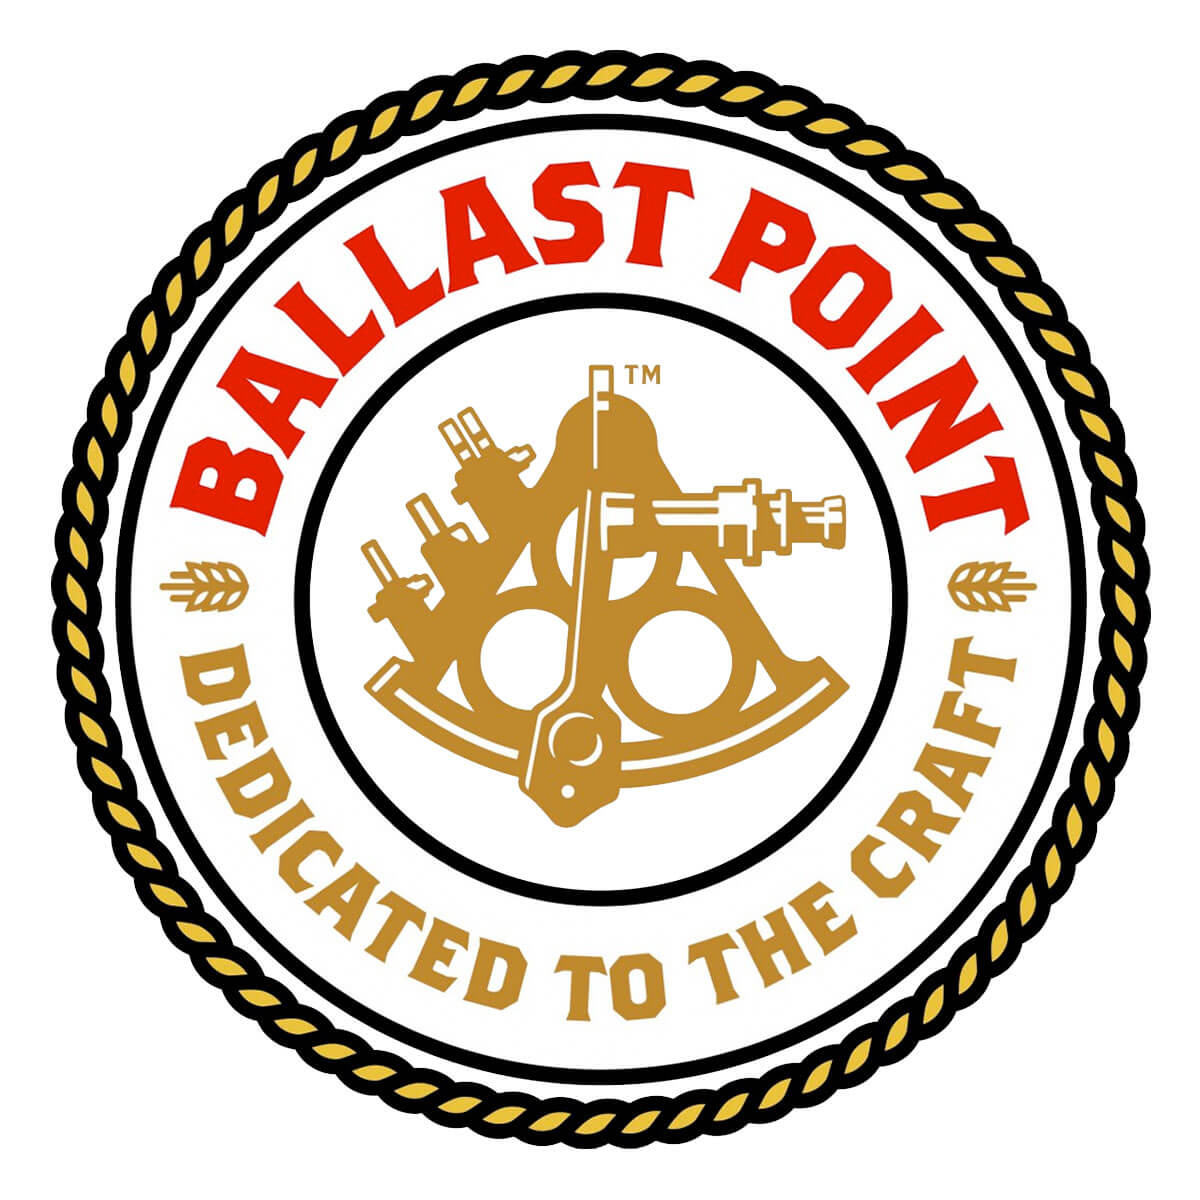 Ballast Point Longfin Lager Beer Keg 5Gal